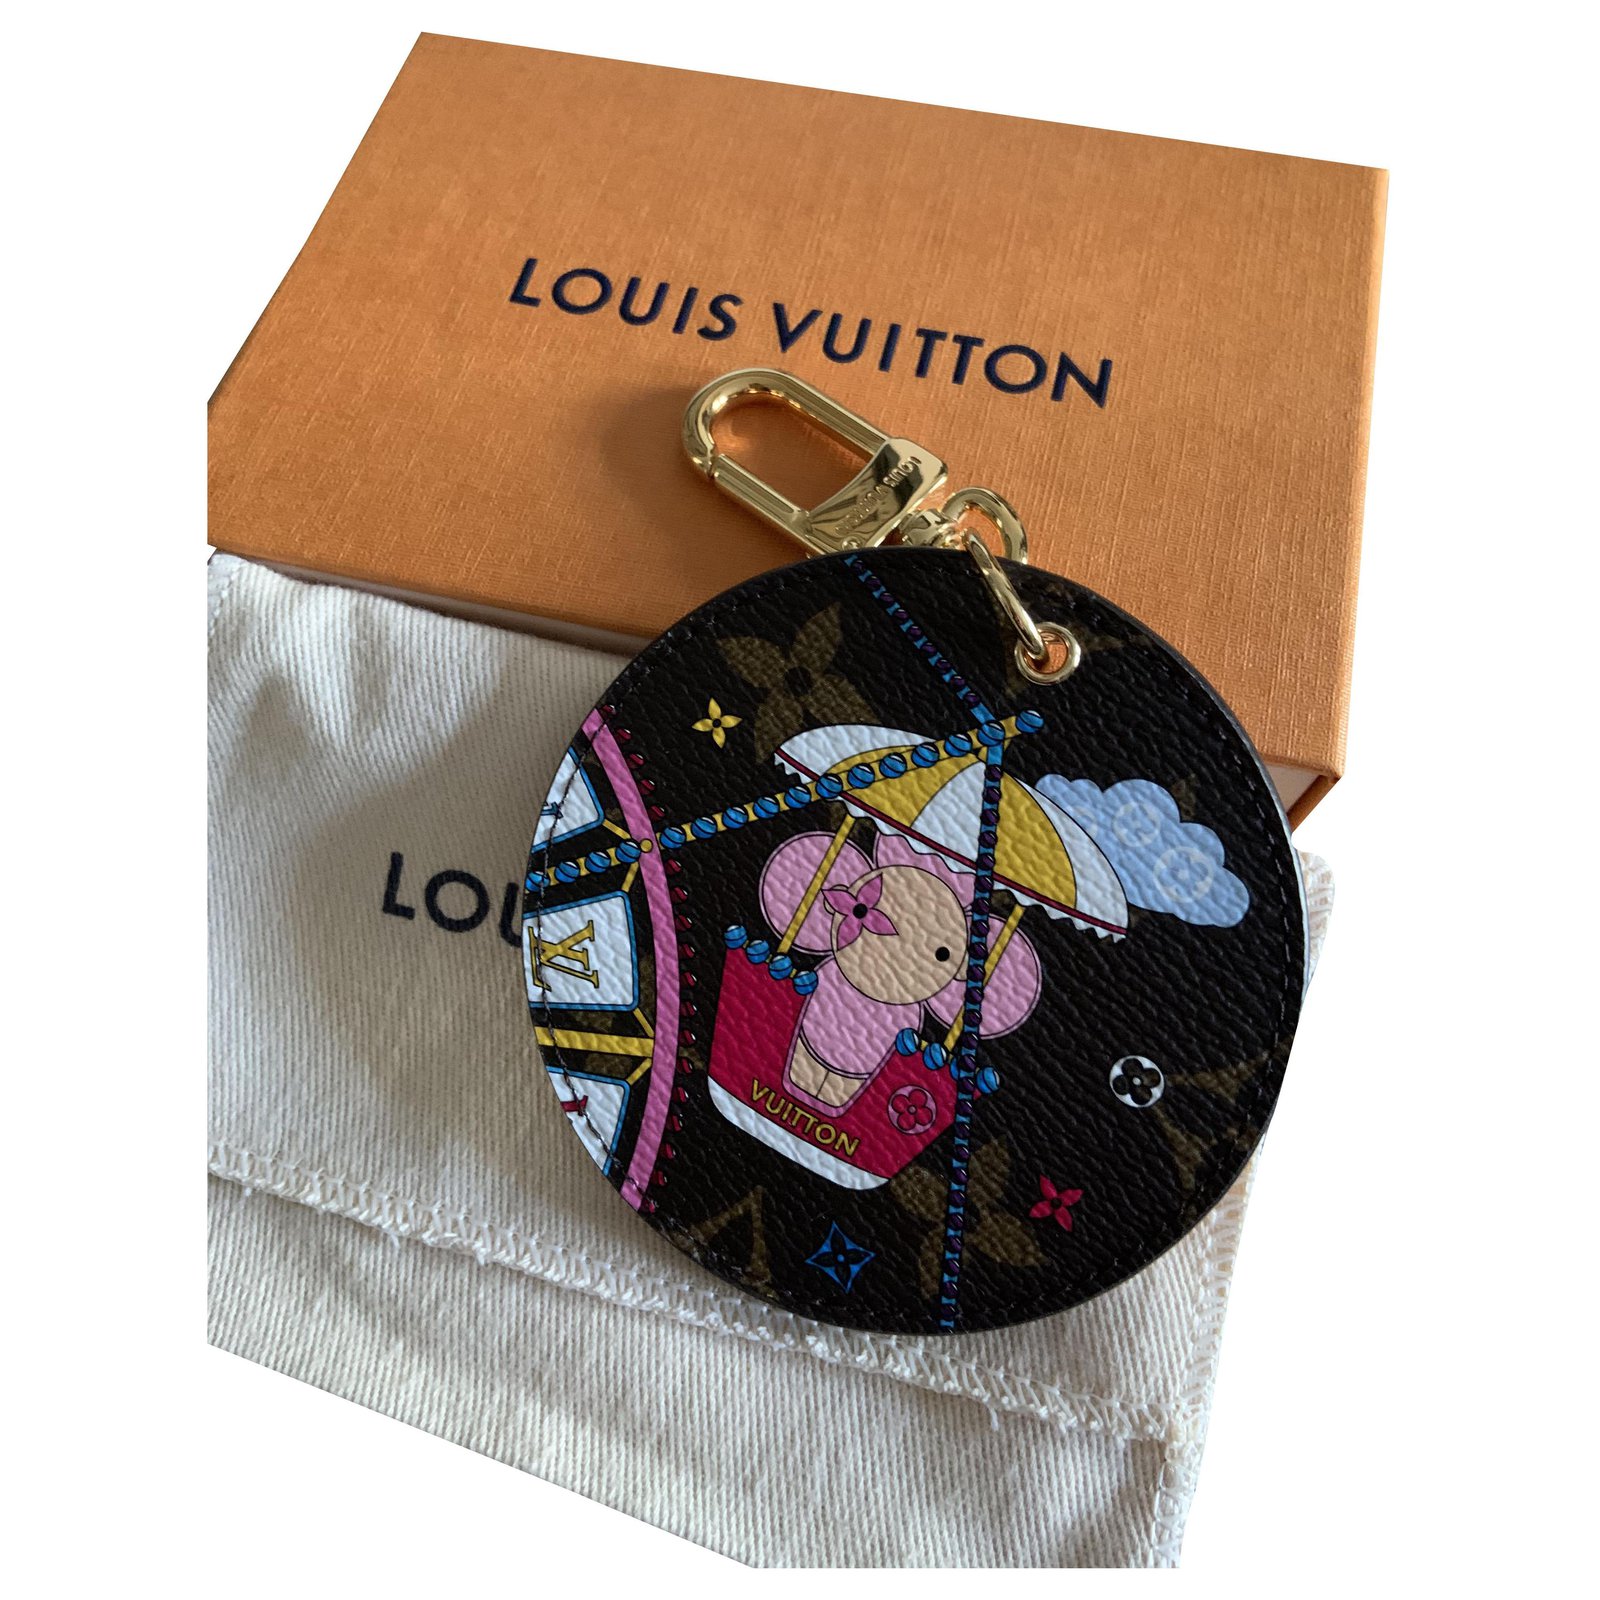 Louis Vuitton Vivienne Fun Xmas Bag Charm and Key Holder